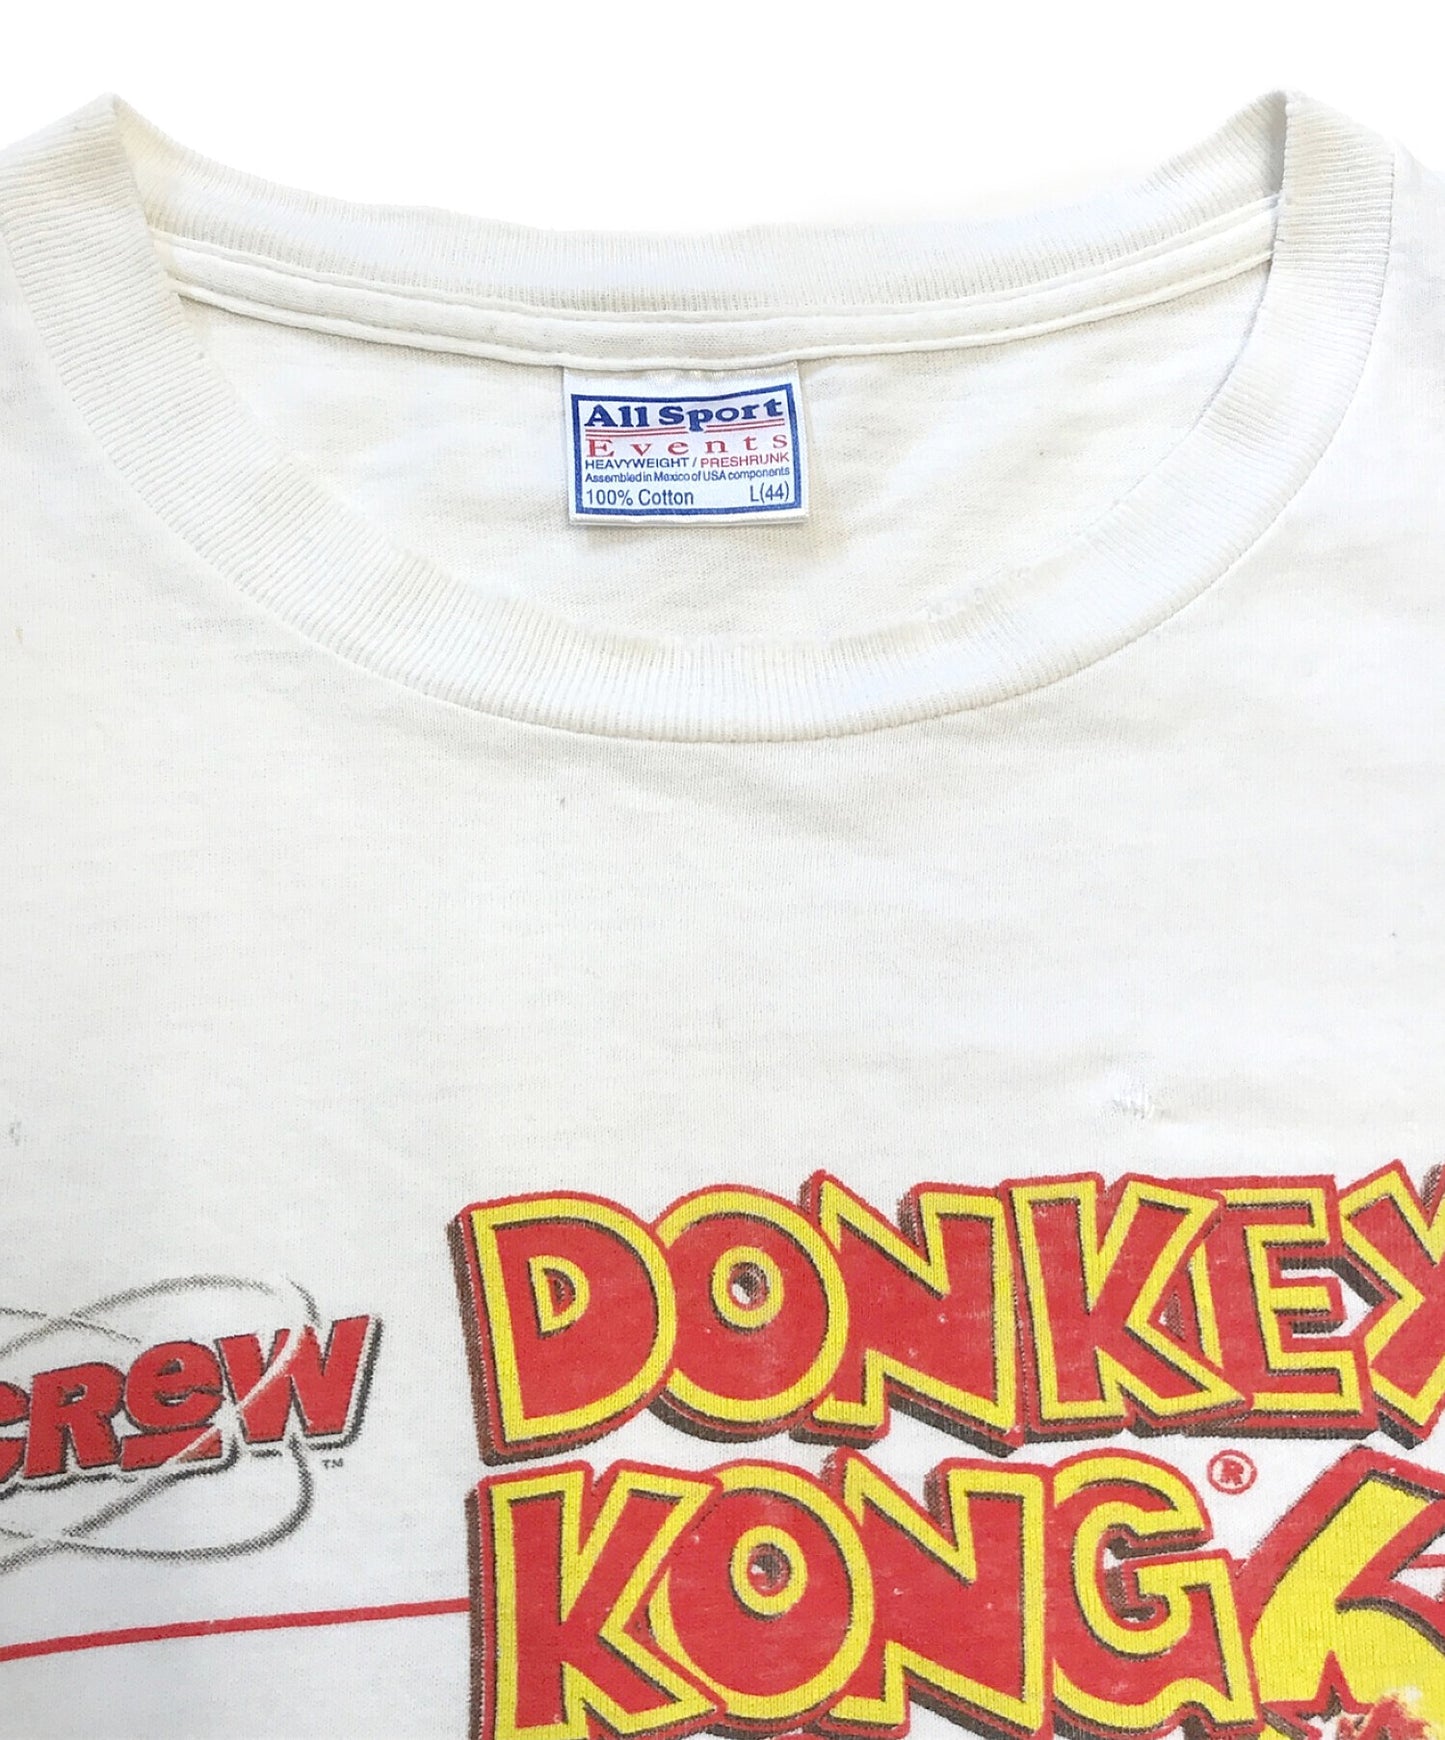 Donkey Kong 64 게임 티셔츠